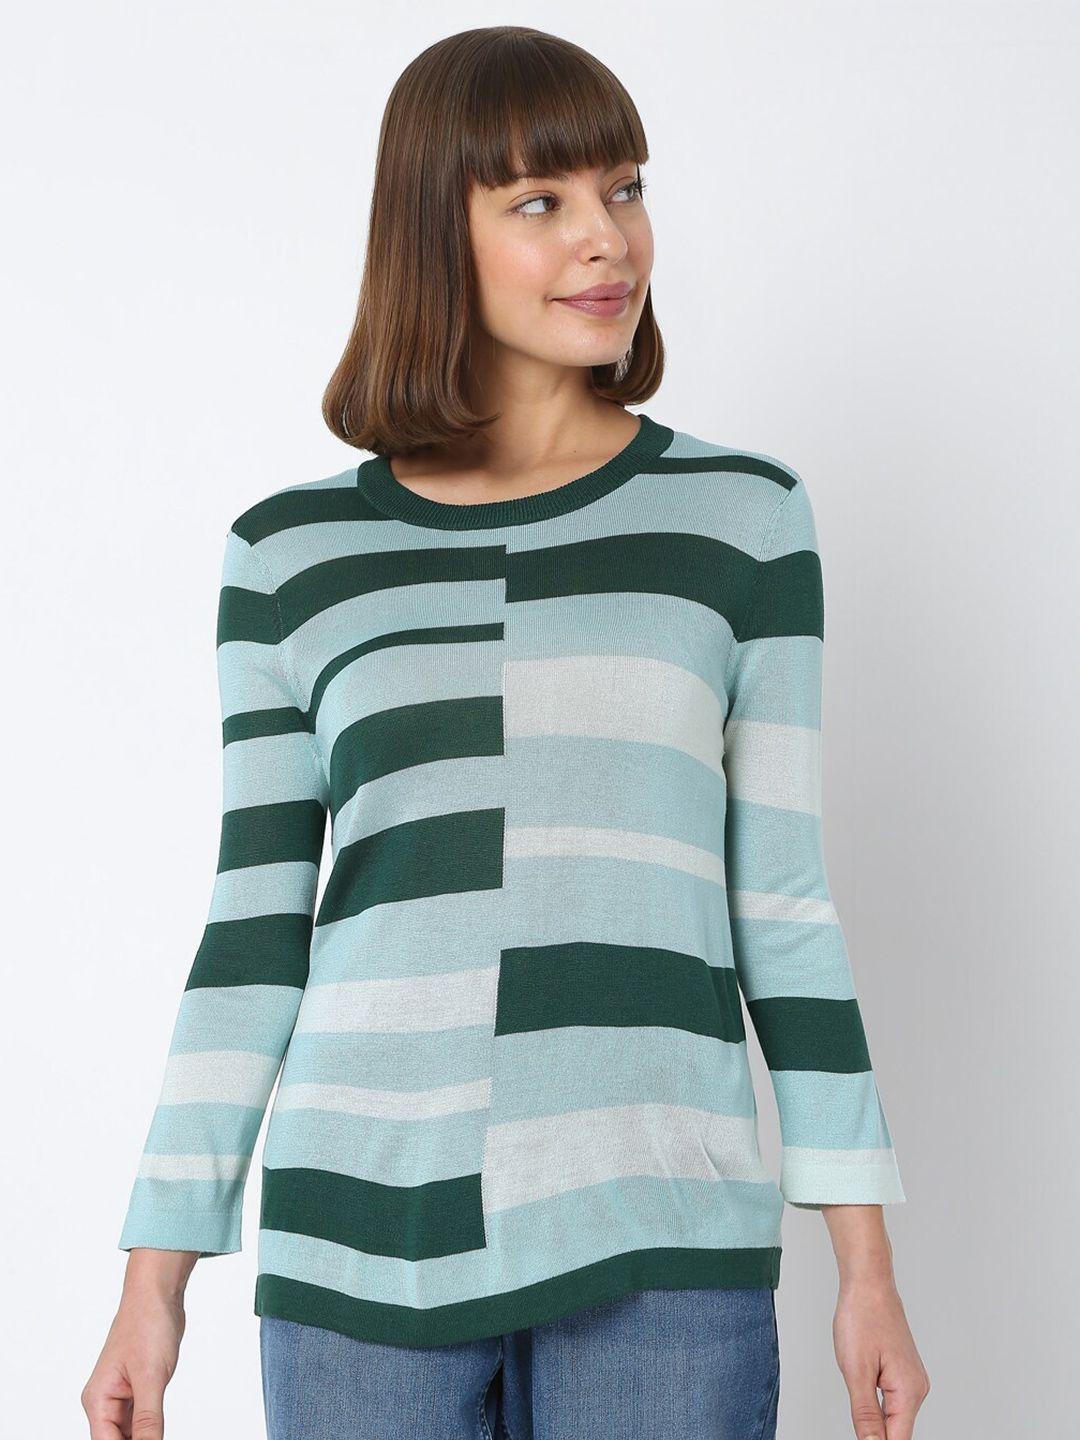 vero moda women green & blue striped sweater